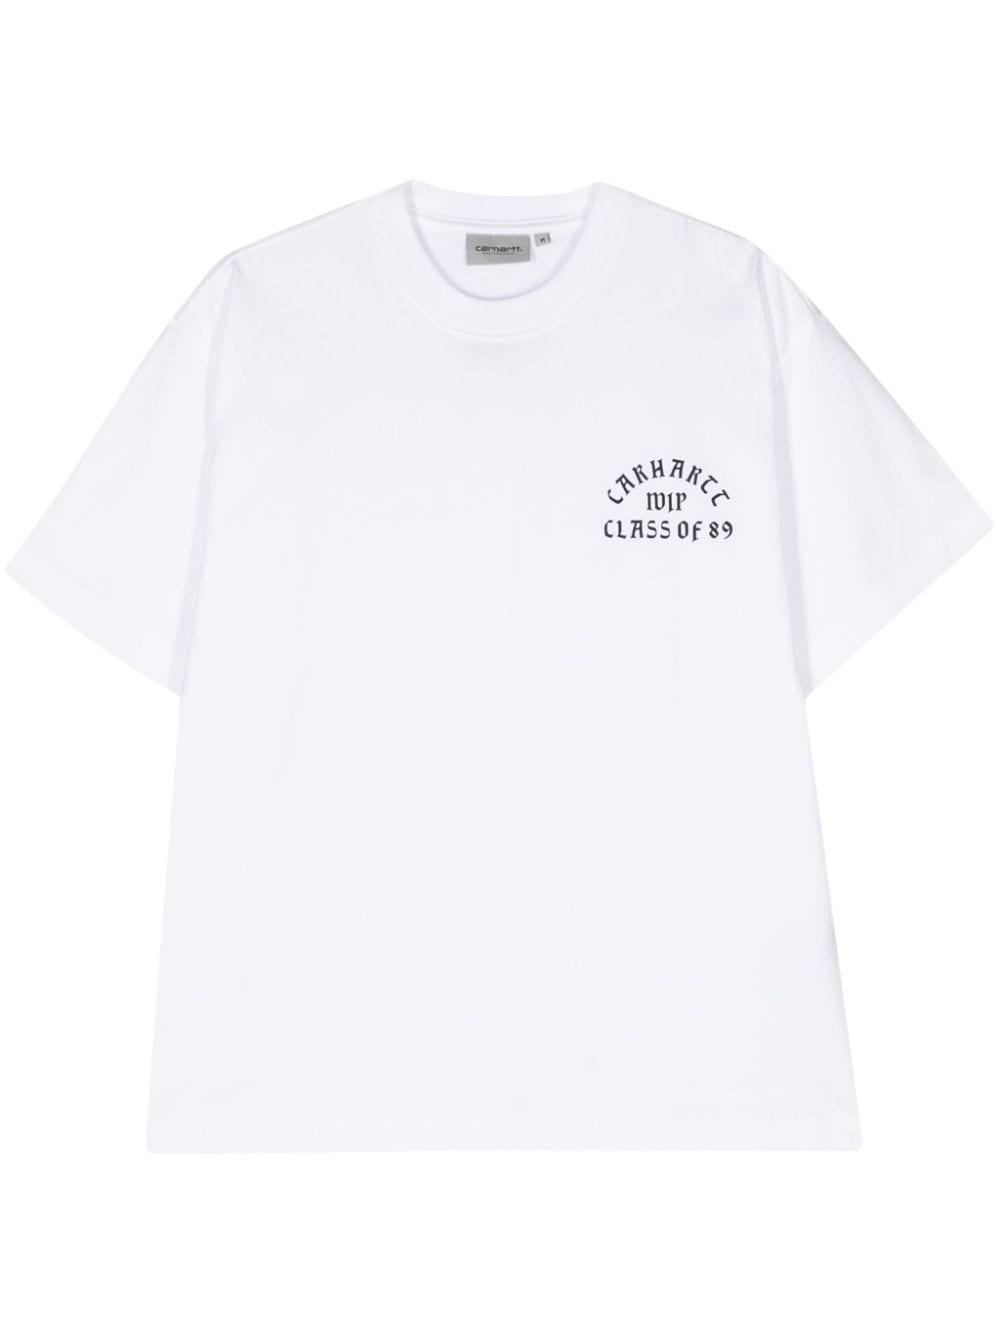 Carhartt WIP S/S Class of 89 organic cotton T-shirt - White von Carhartt WIP